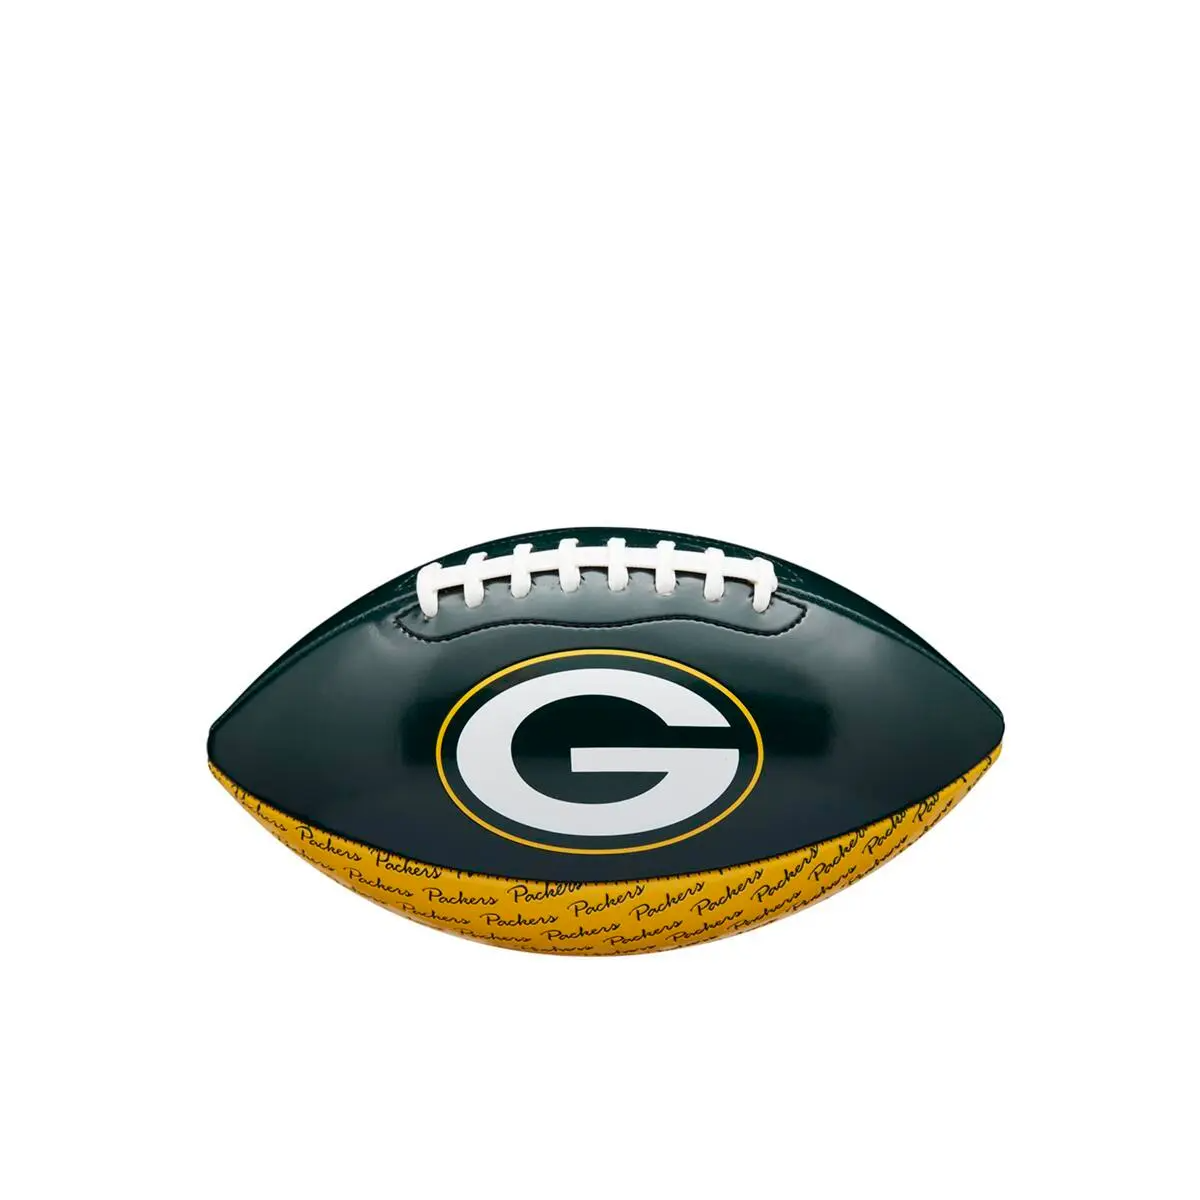 Mini ballon de Football Americain Wilson NFL Team Peewee des Green Bay Packers